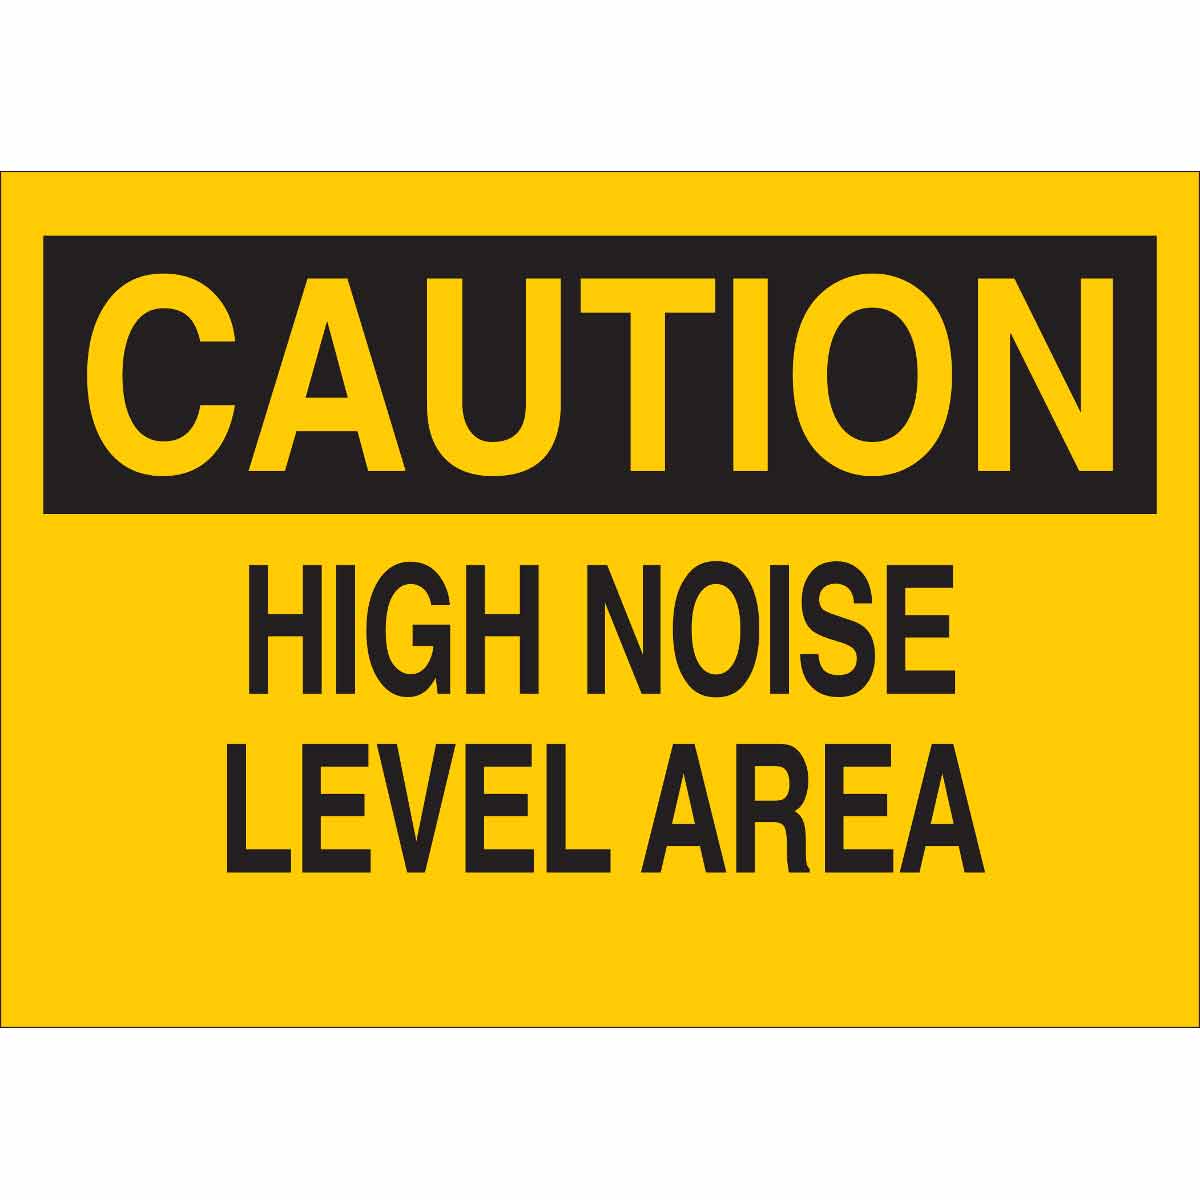 NEW Brady 25270 7" x 10" "Caution High Radiation Area" Plastic Safety Sign